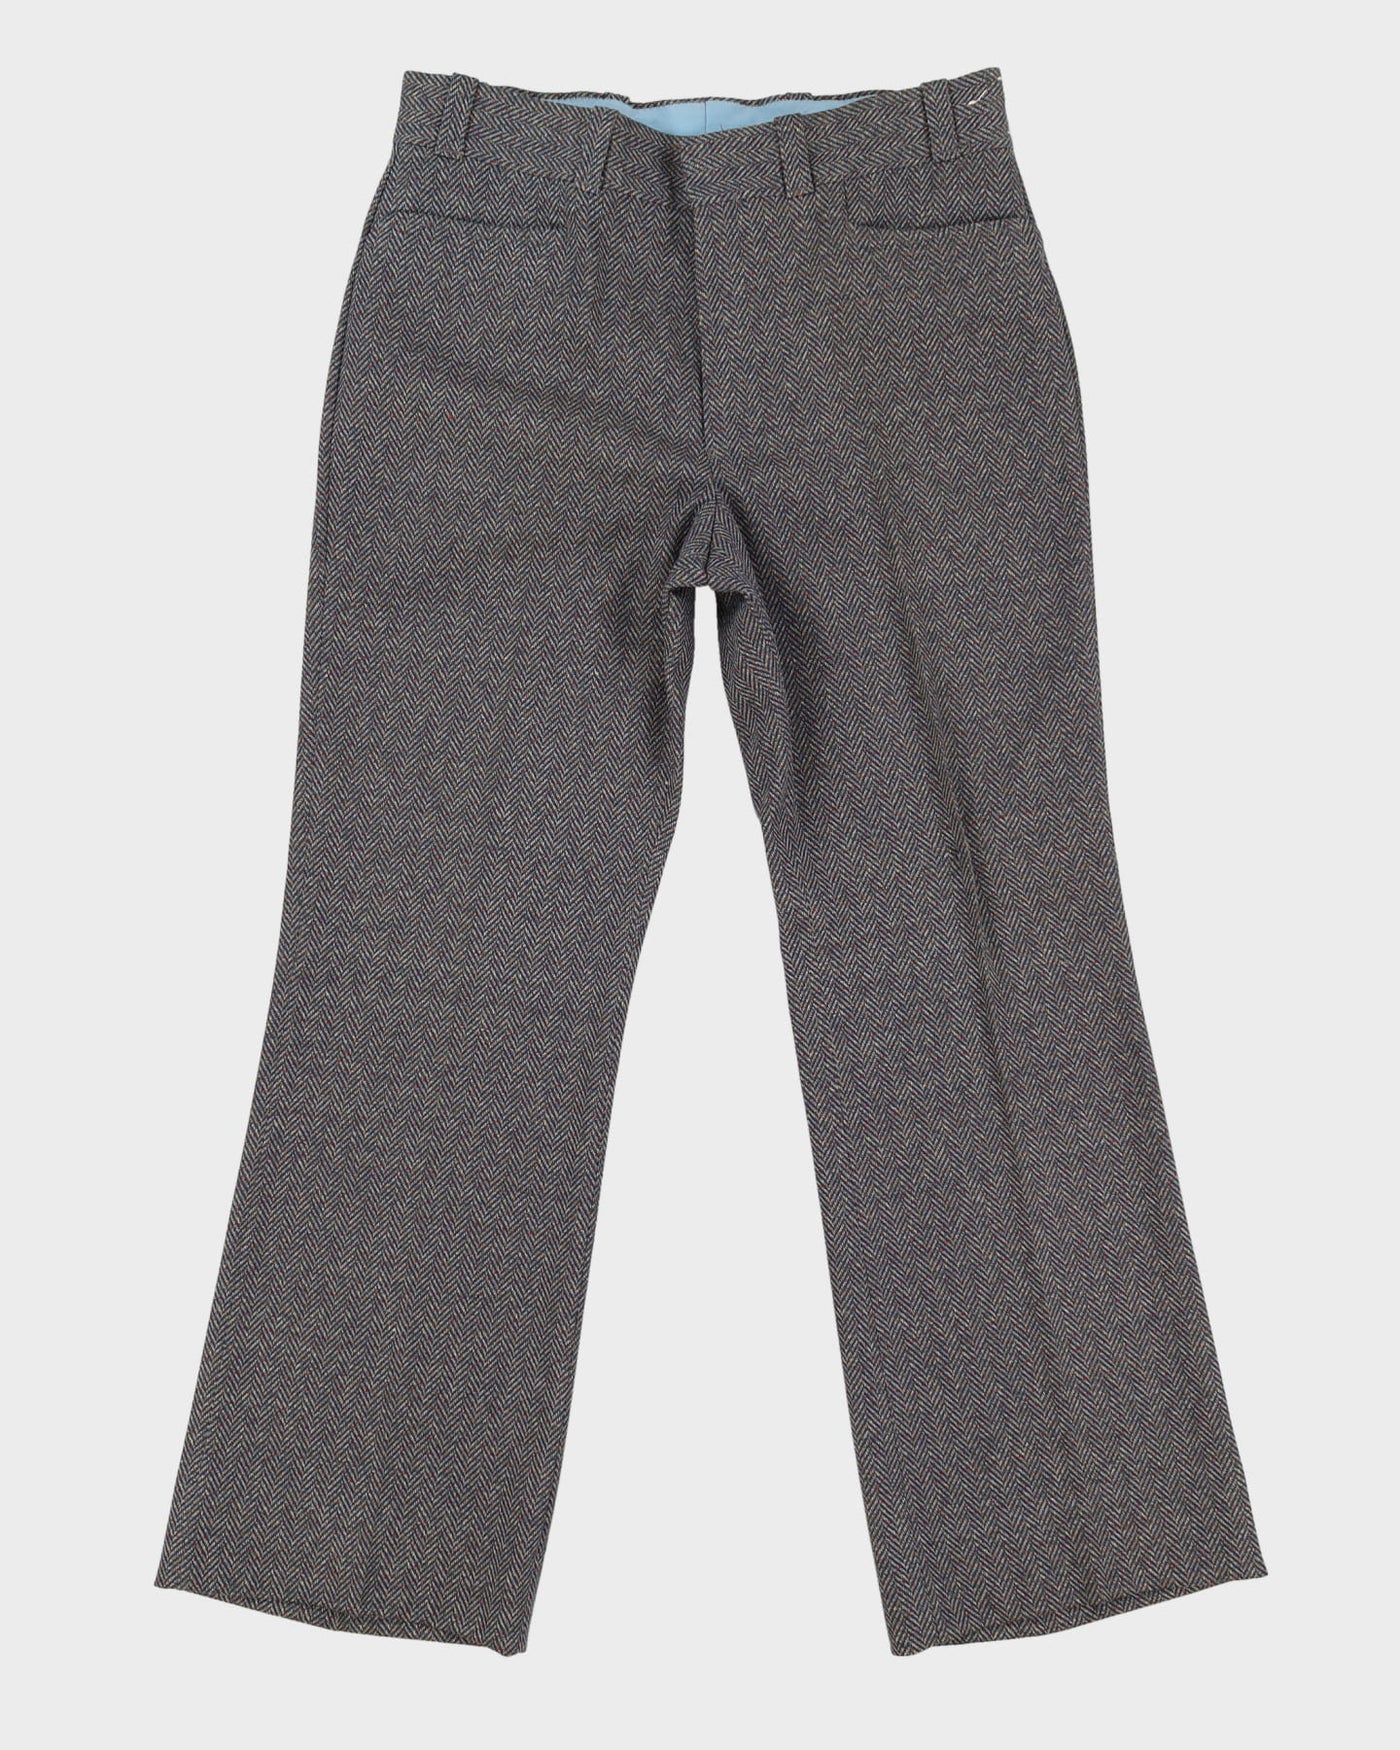 Vintage 80s GWG Grey Patterned Trousers - W34 L31